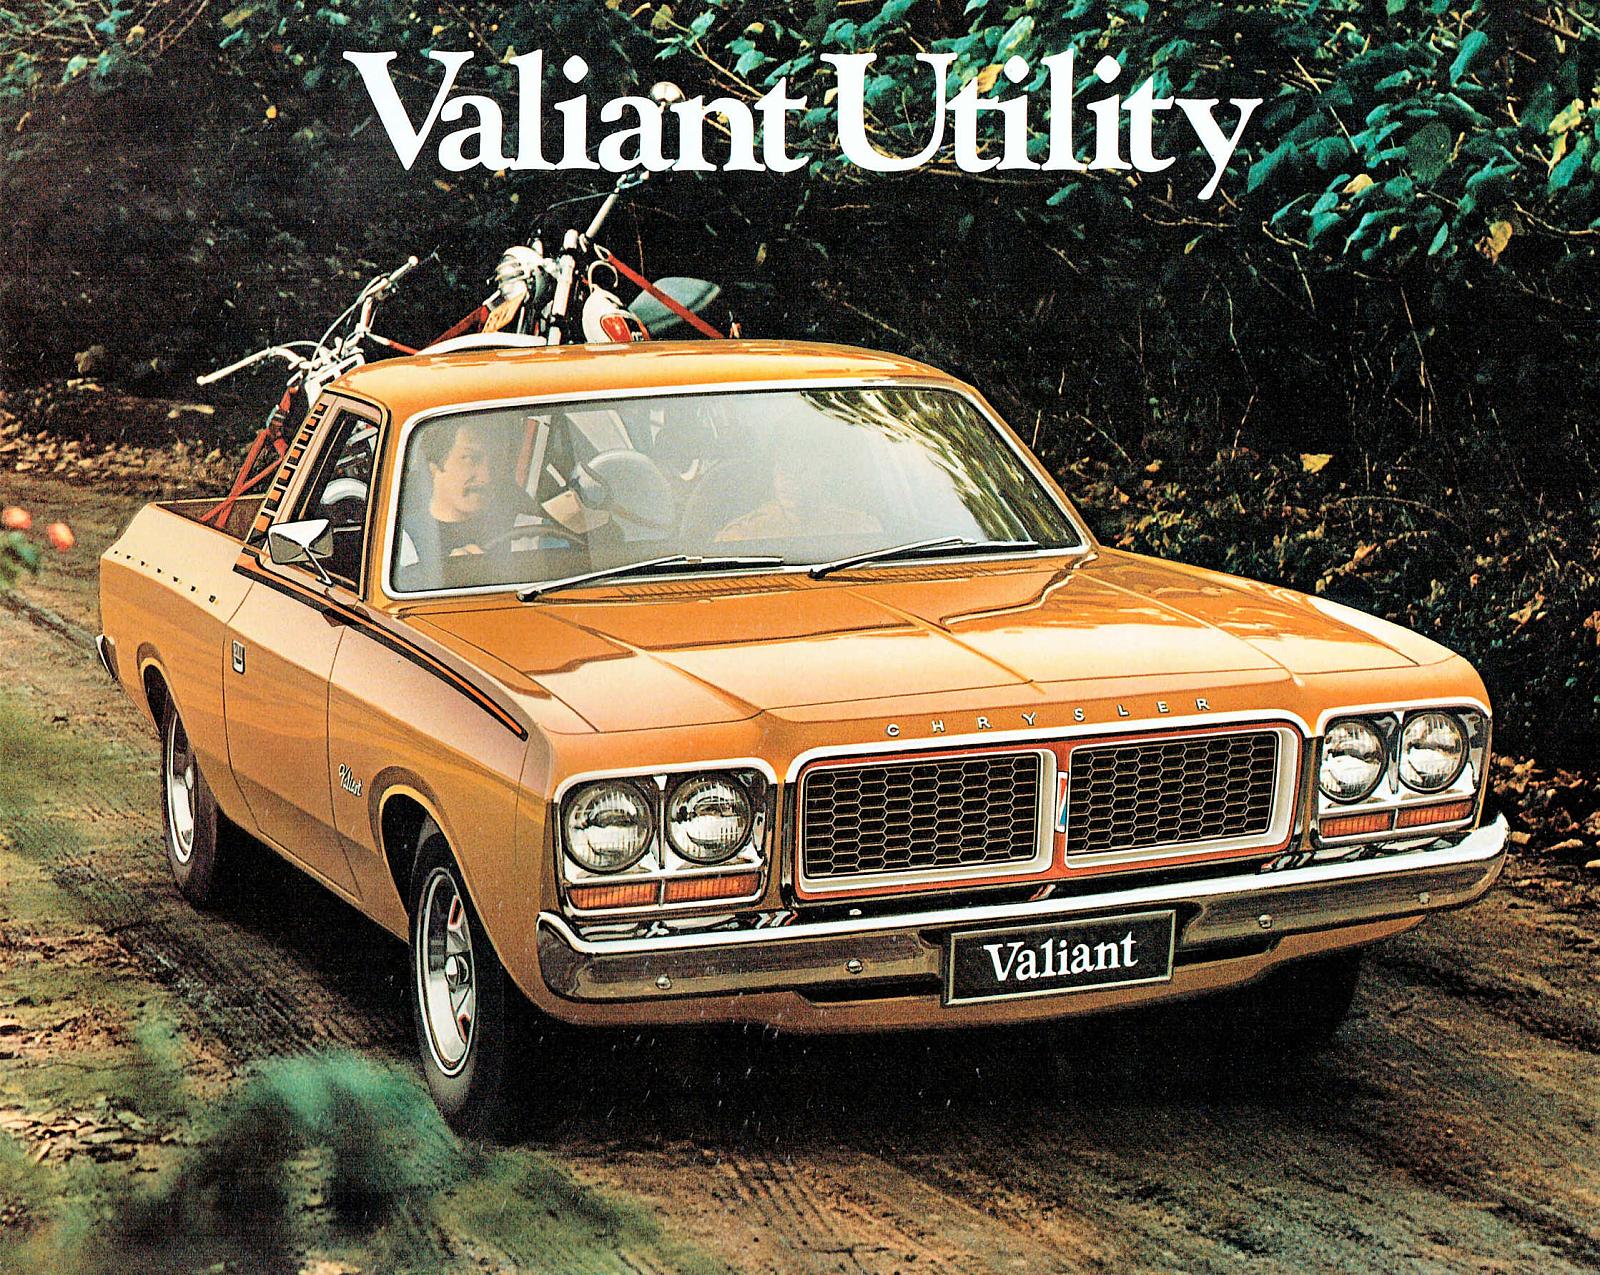 1976 Chrysler CL Valiant Utility Brochure Page 1